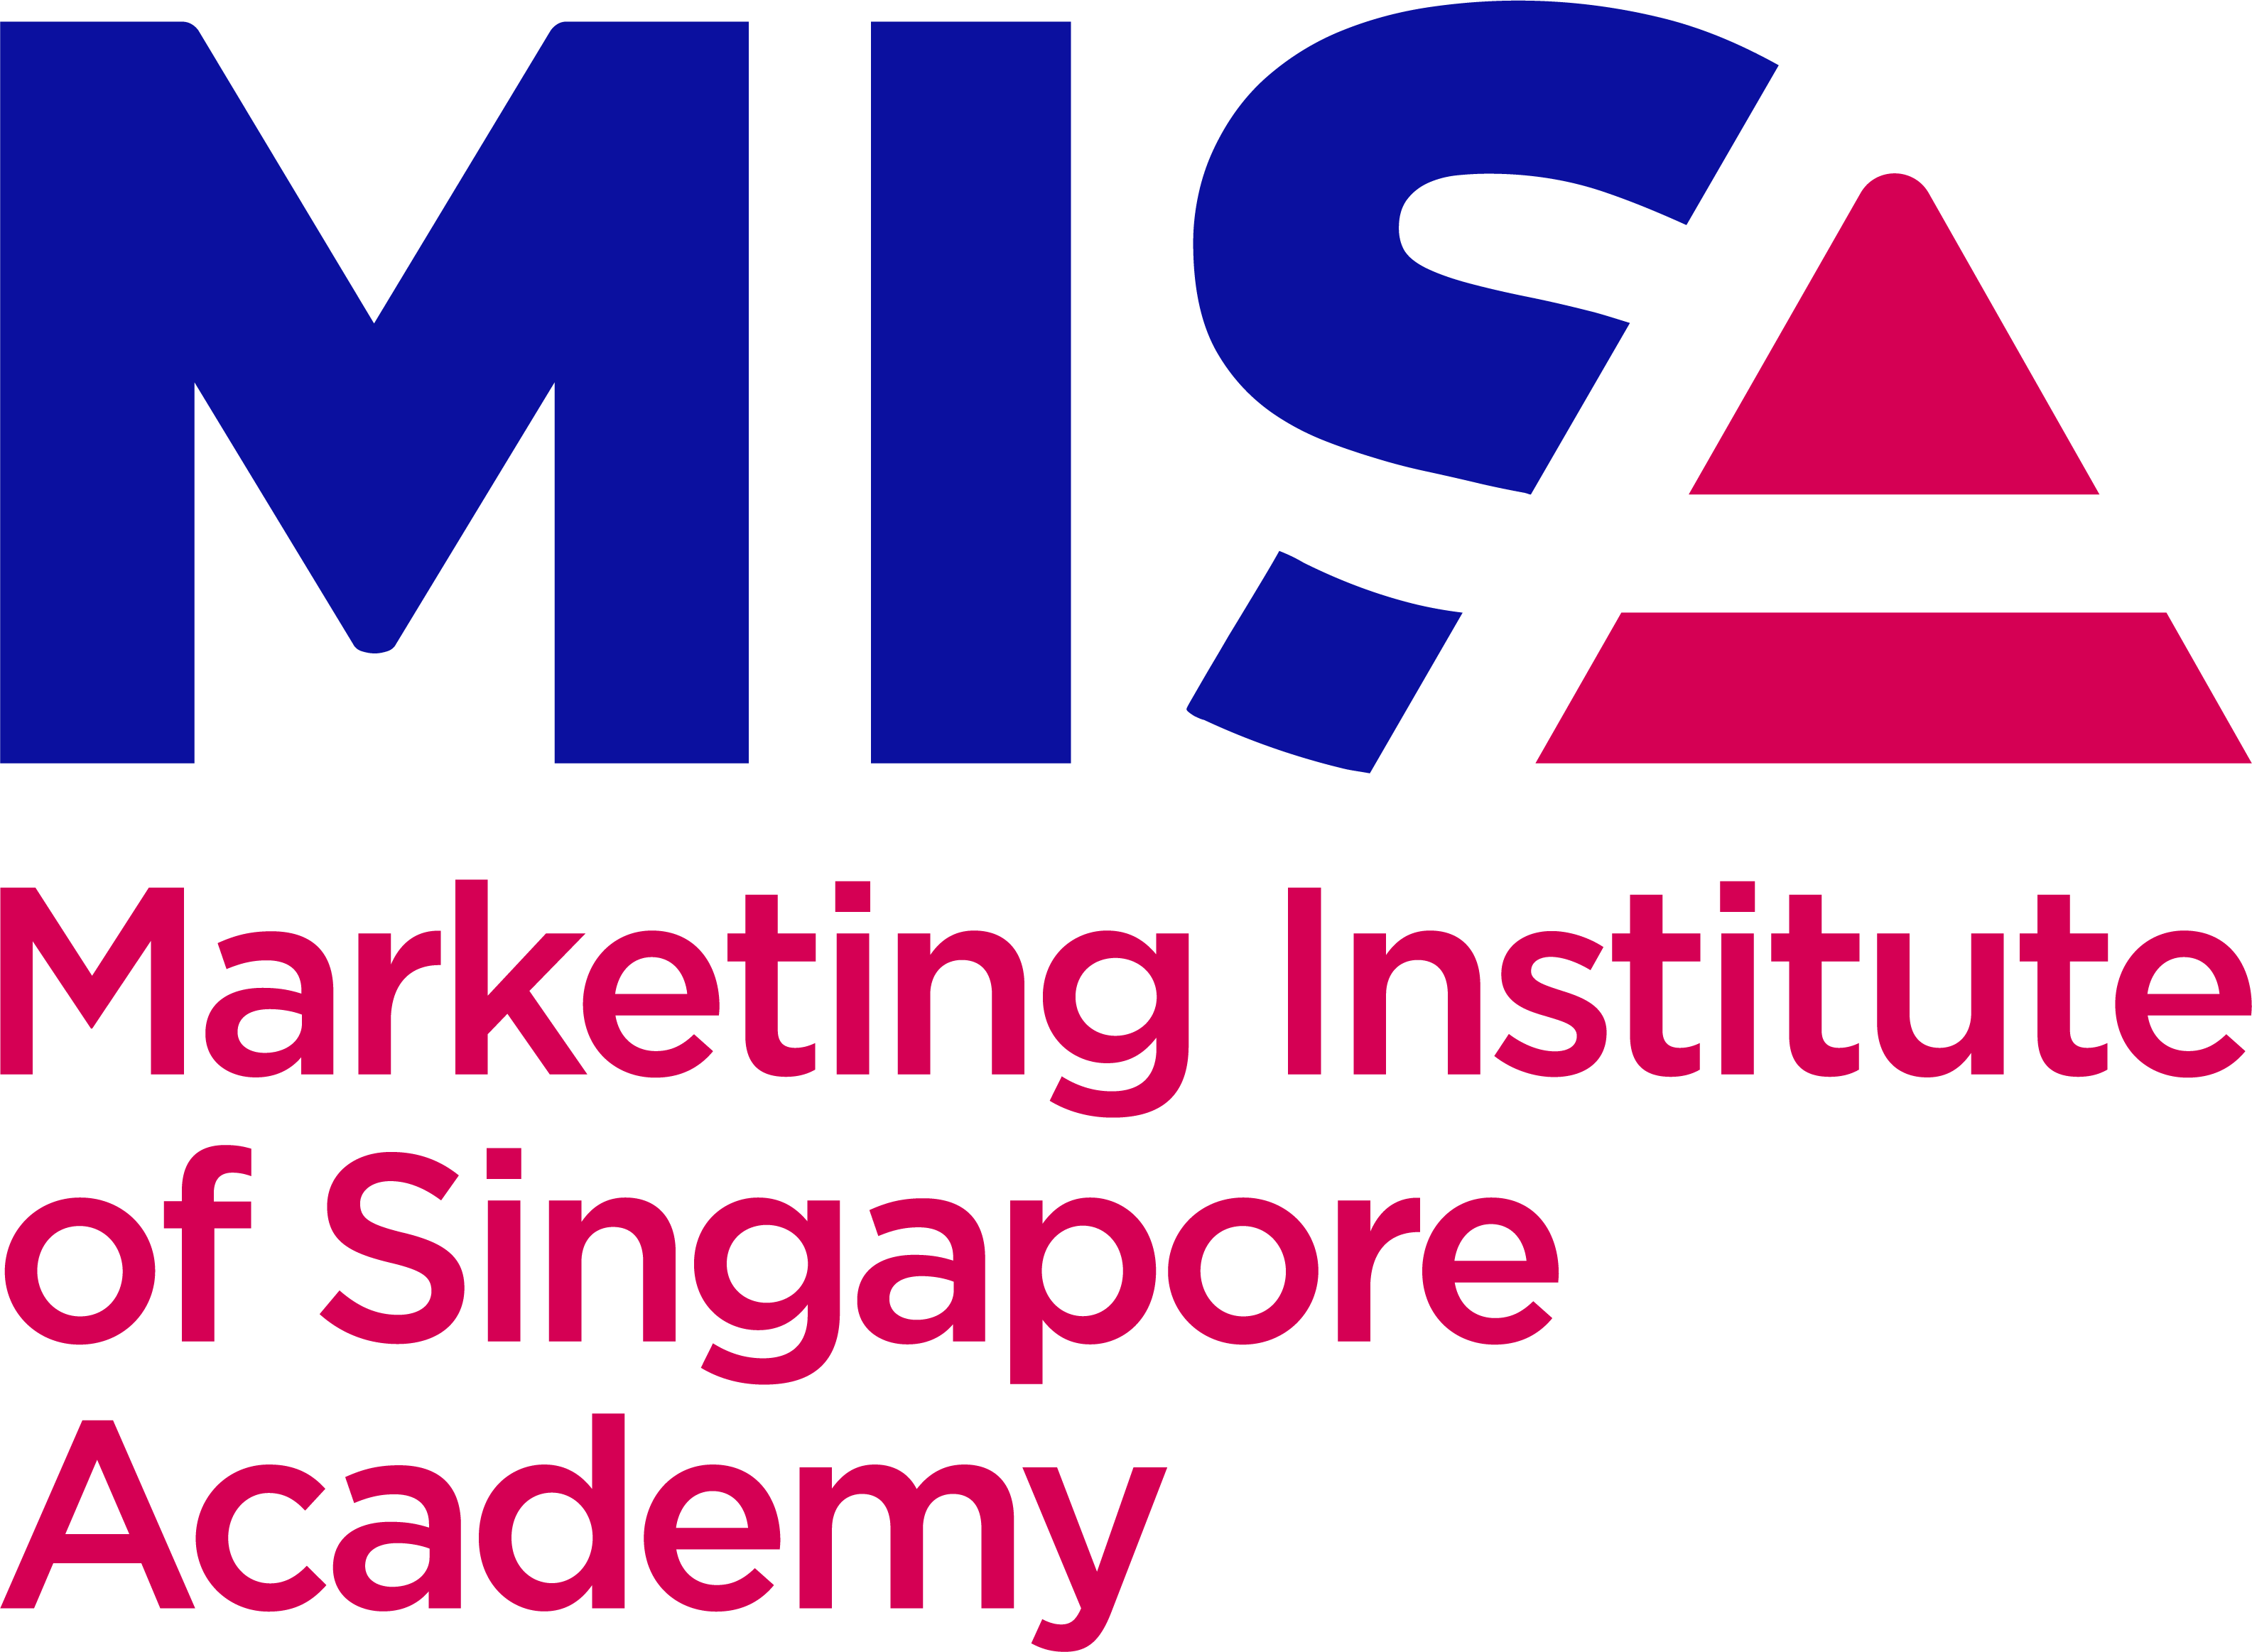 Marketing Institute of Singapore Academy